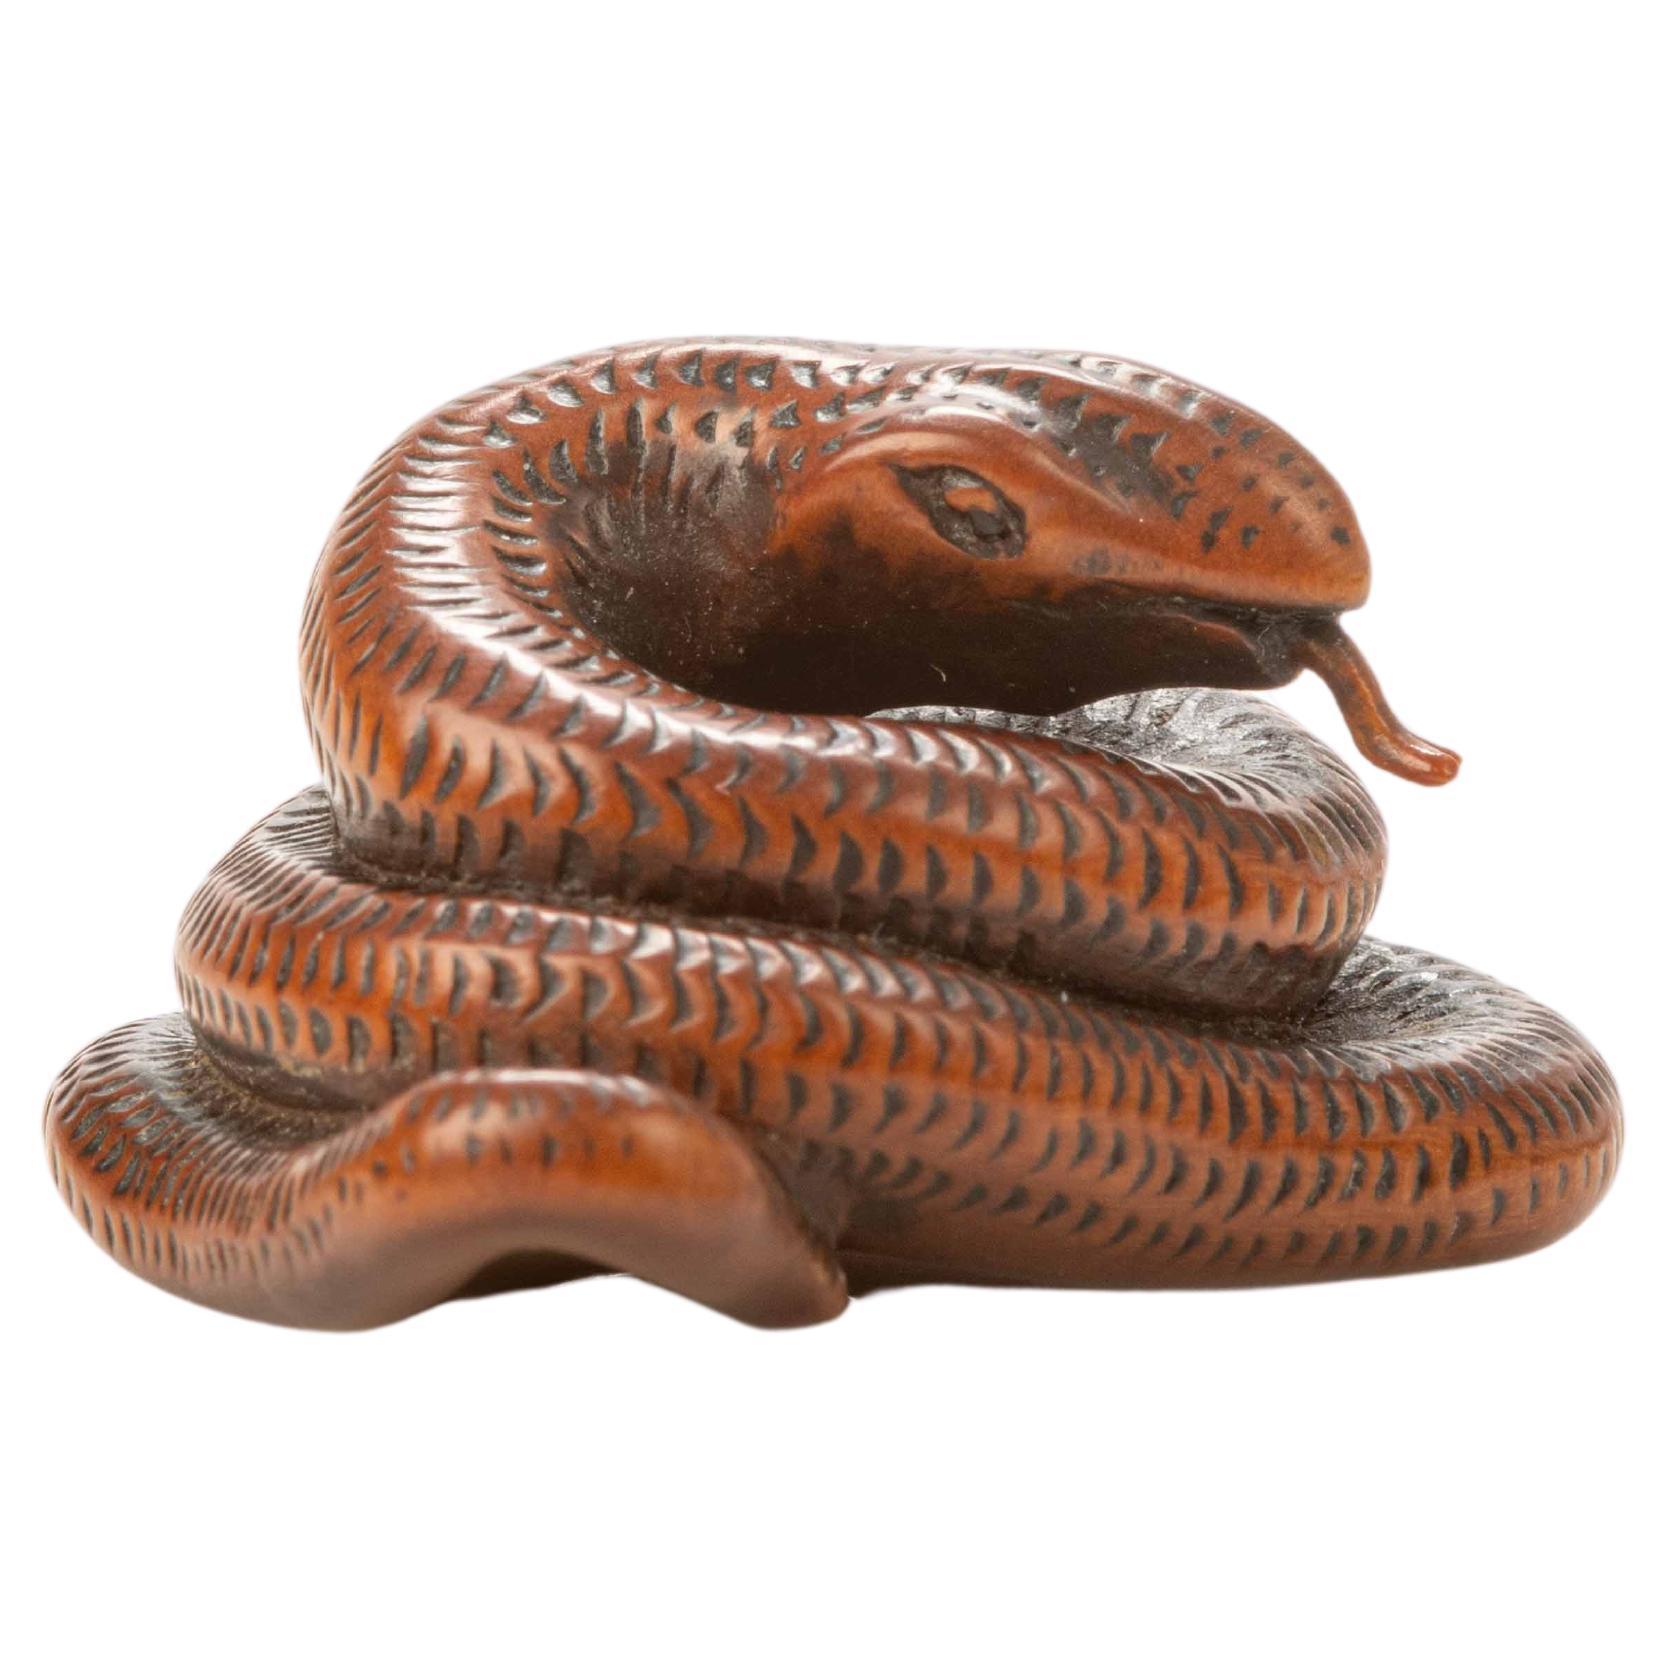 A boxwood netsuke depicting a snake For Sale